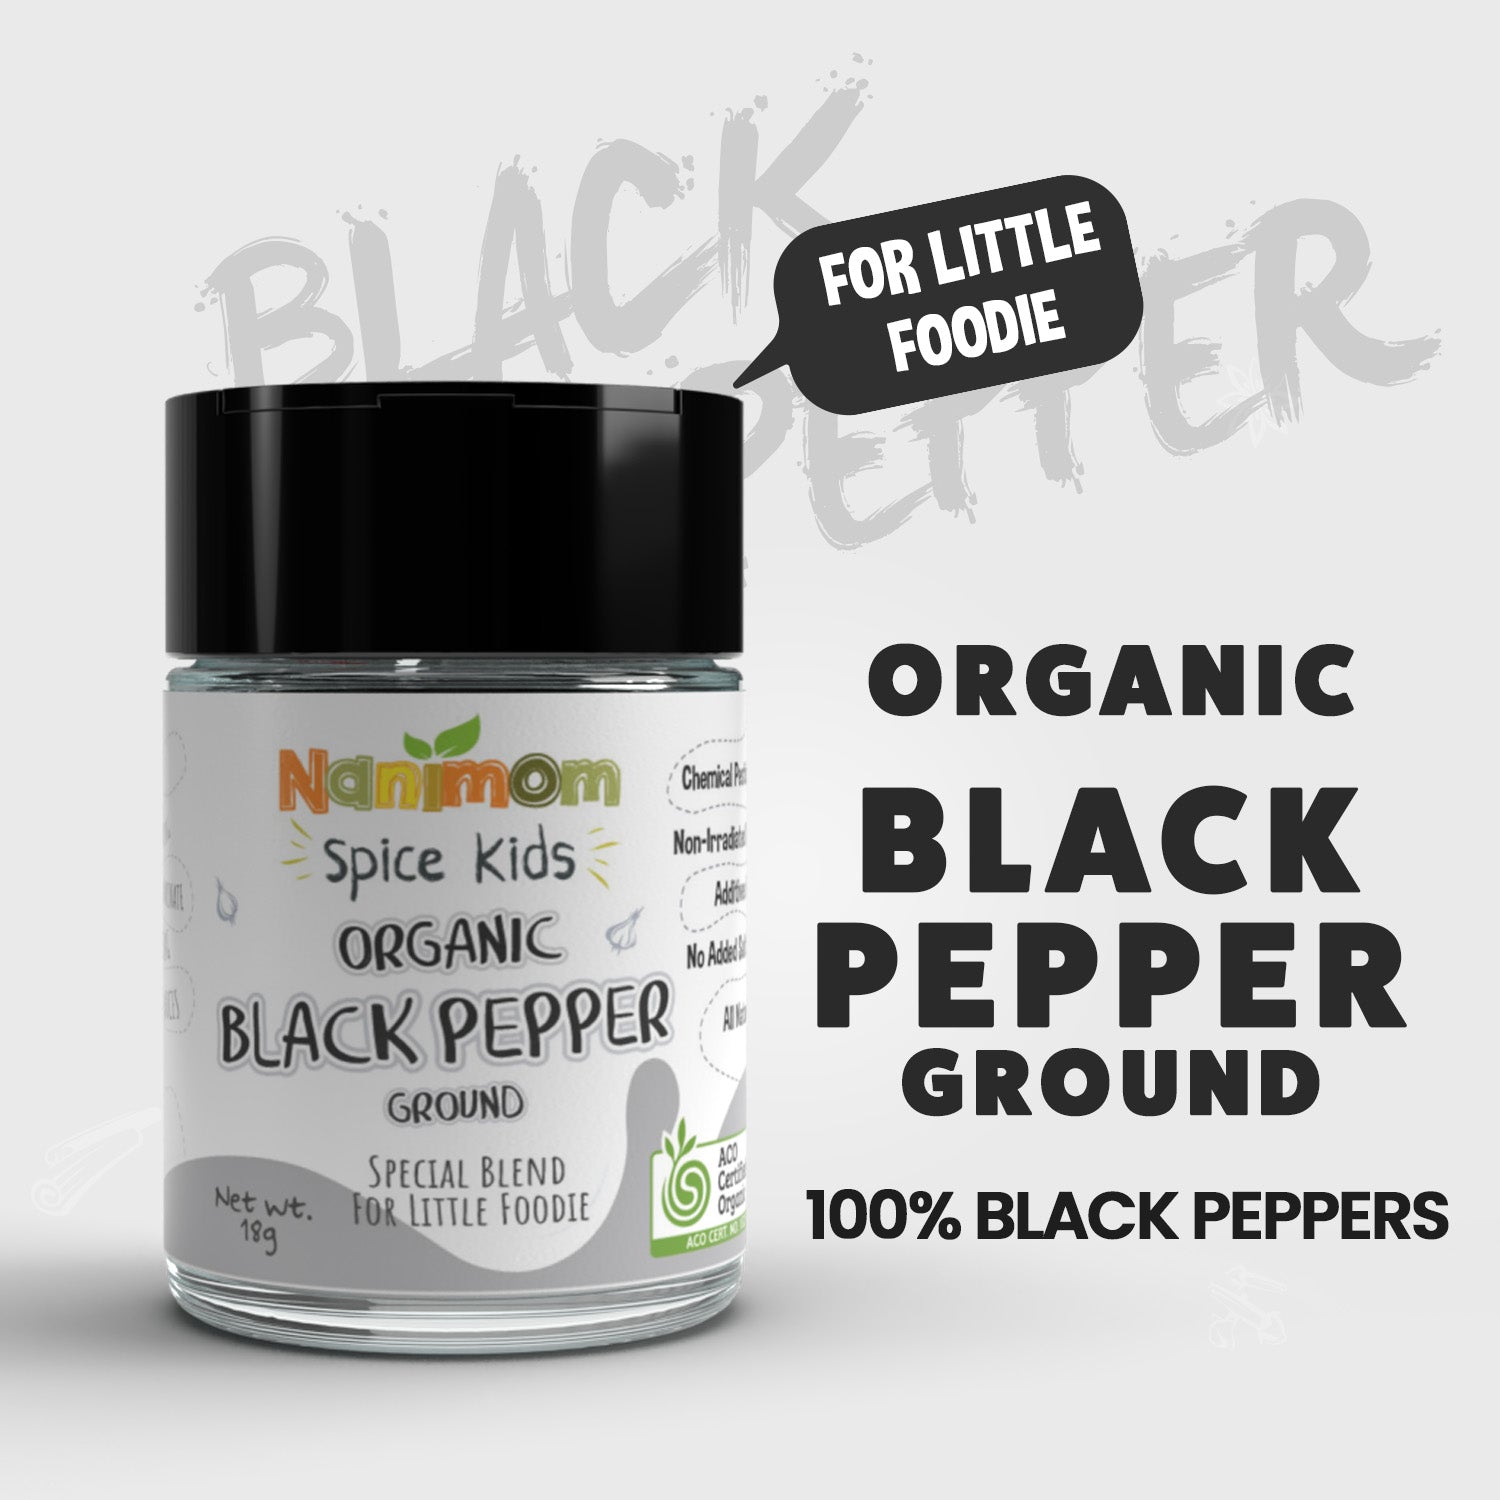 Nanimom Spice Kids Organic Black Pepper Ground 25g